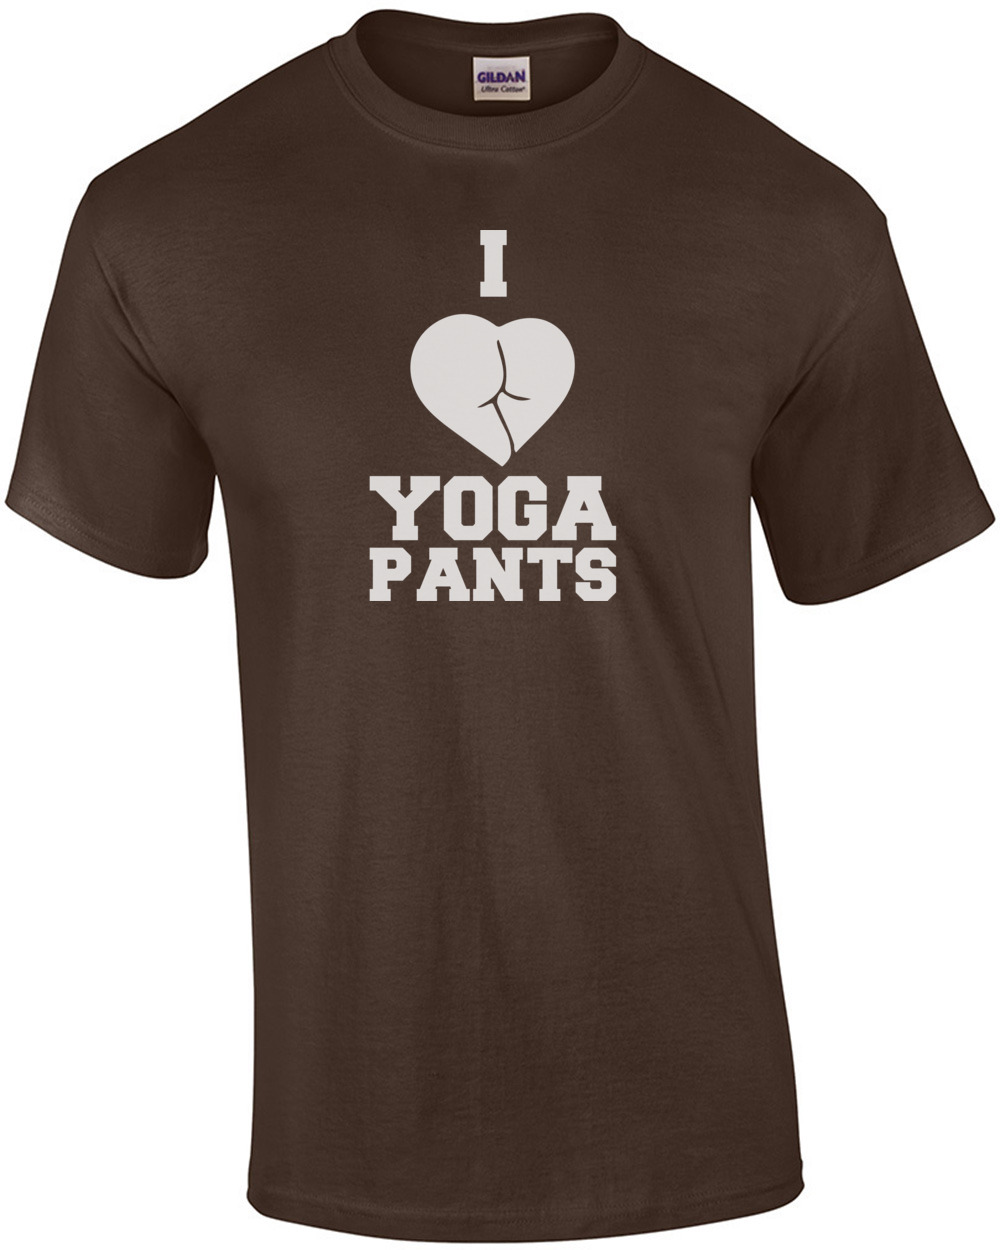 I Love Yoga Pants - Funny Yoga T-shirt Shirt